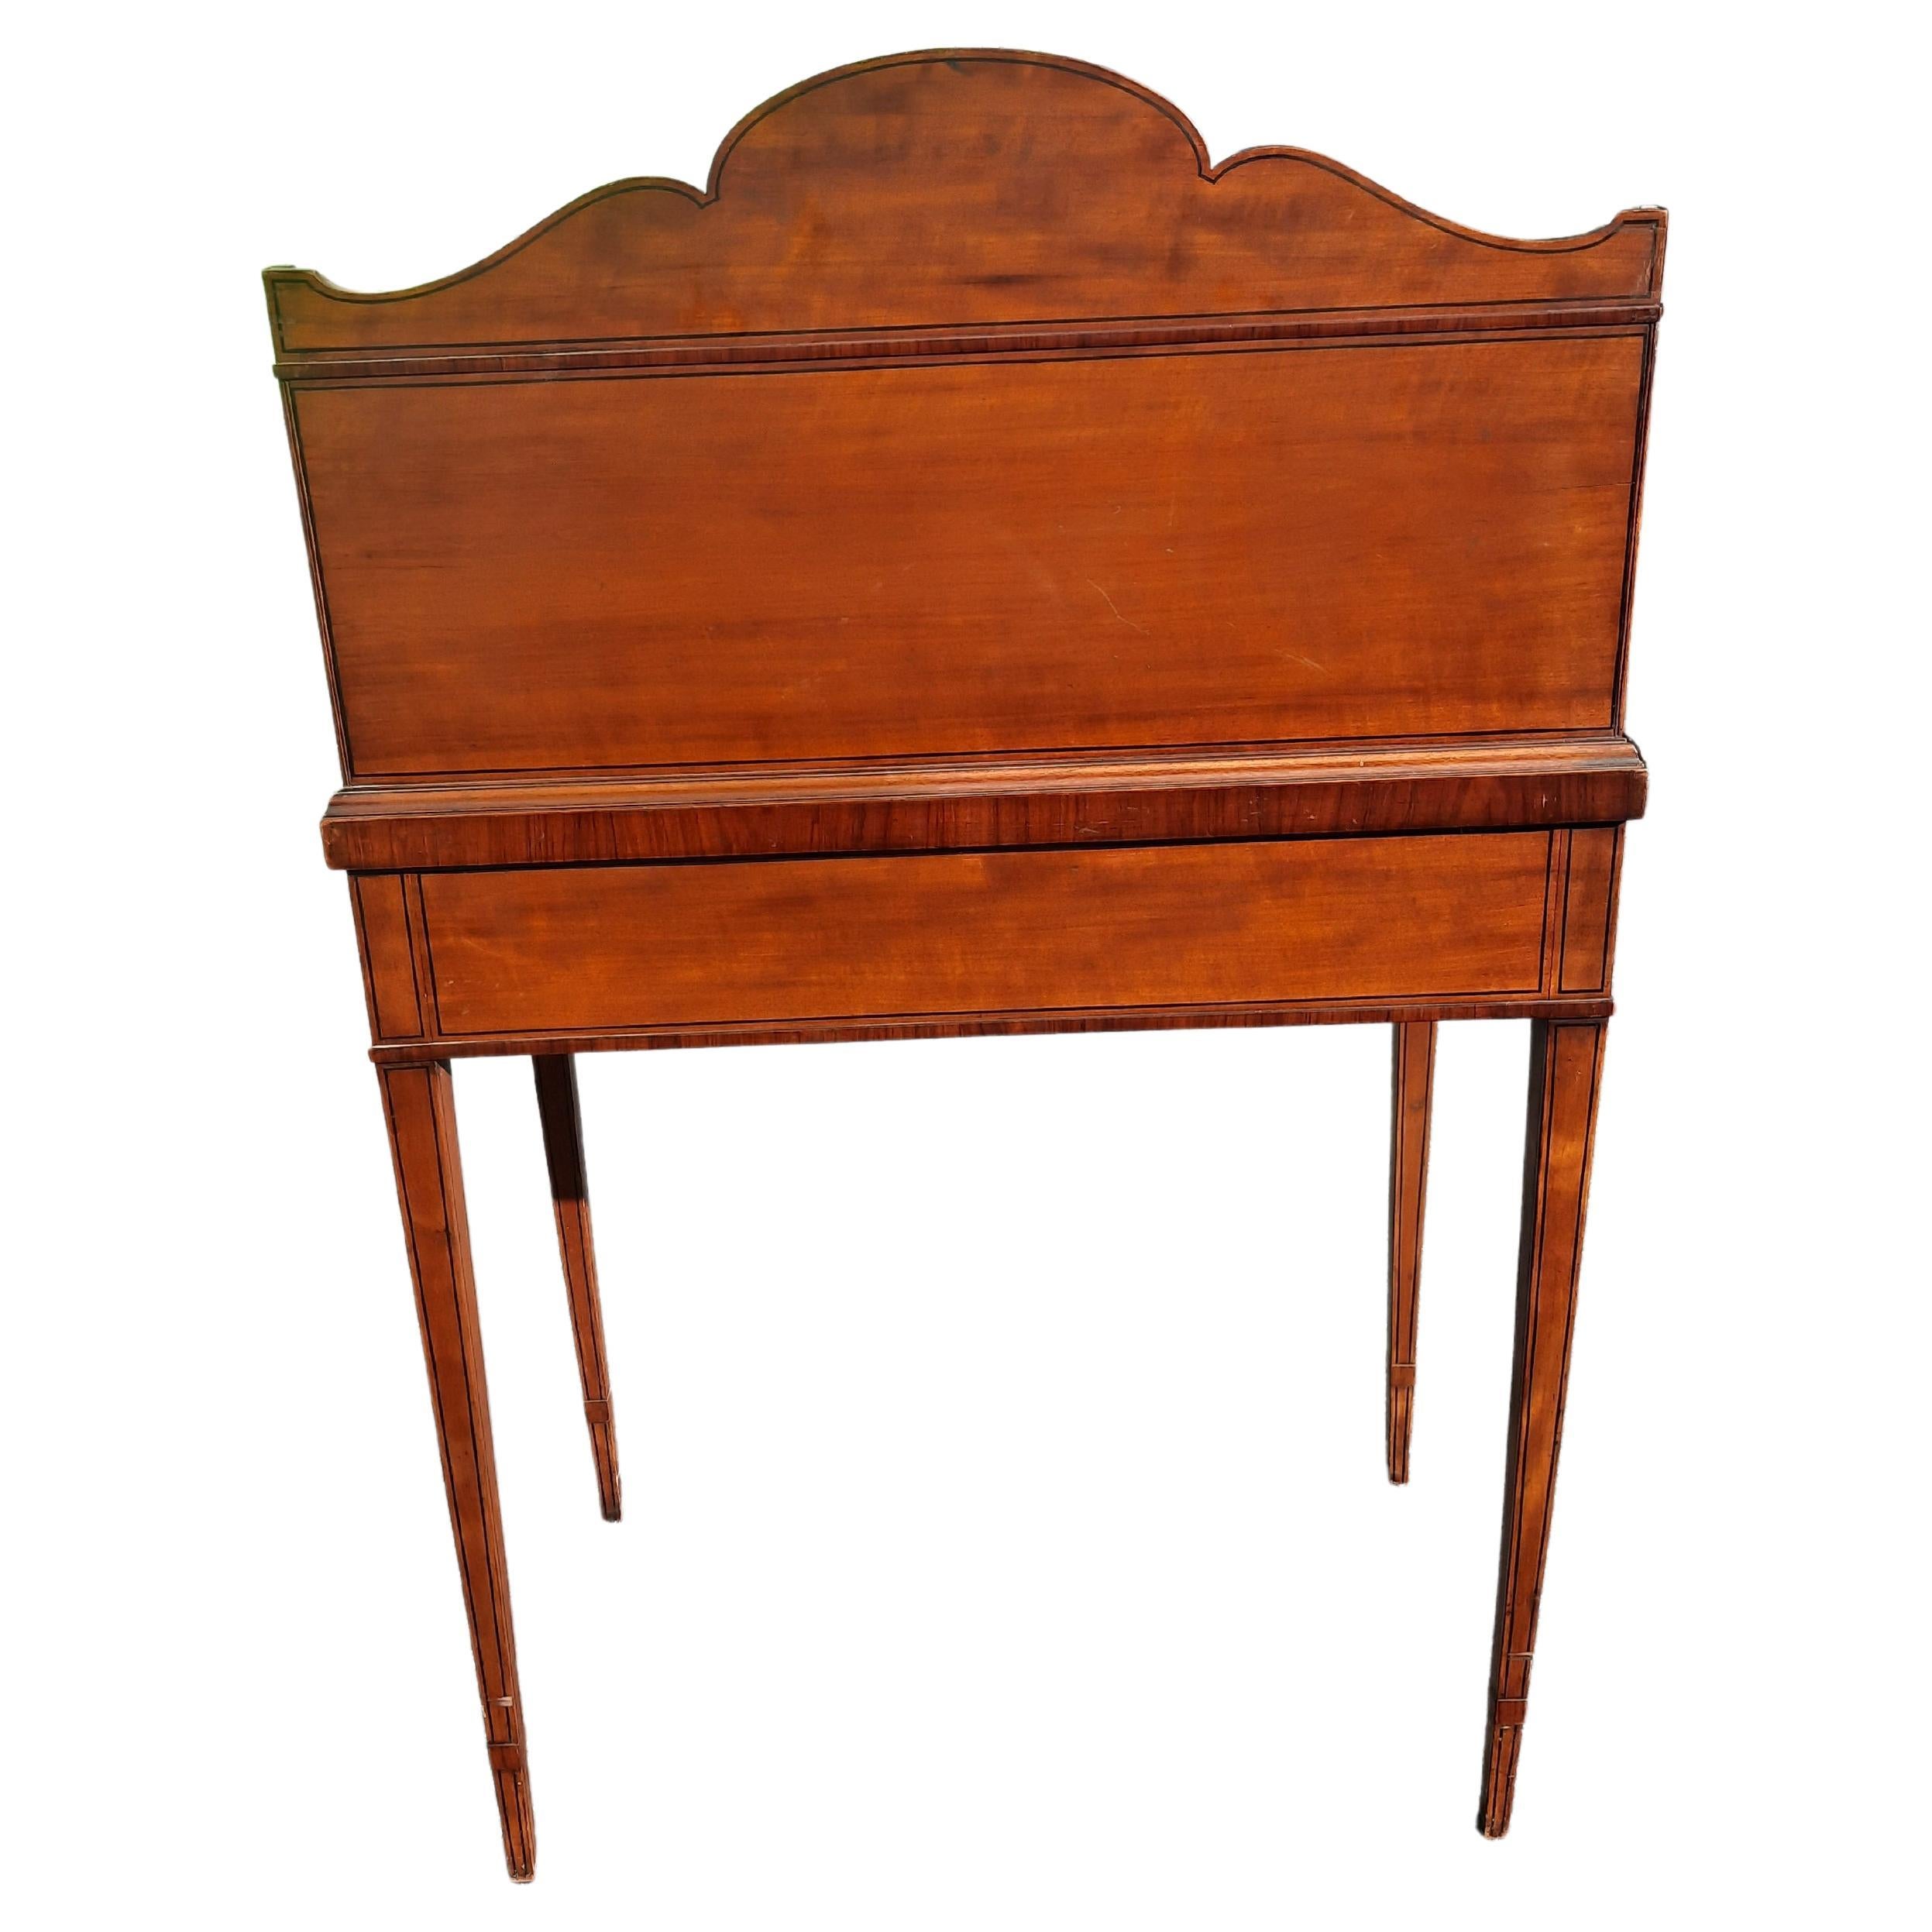 1940s Petite Mahogany Ornate Painted Secretary Bureau with Flip Leather Top For Sale 5